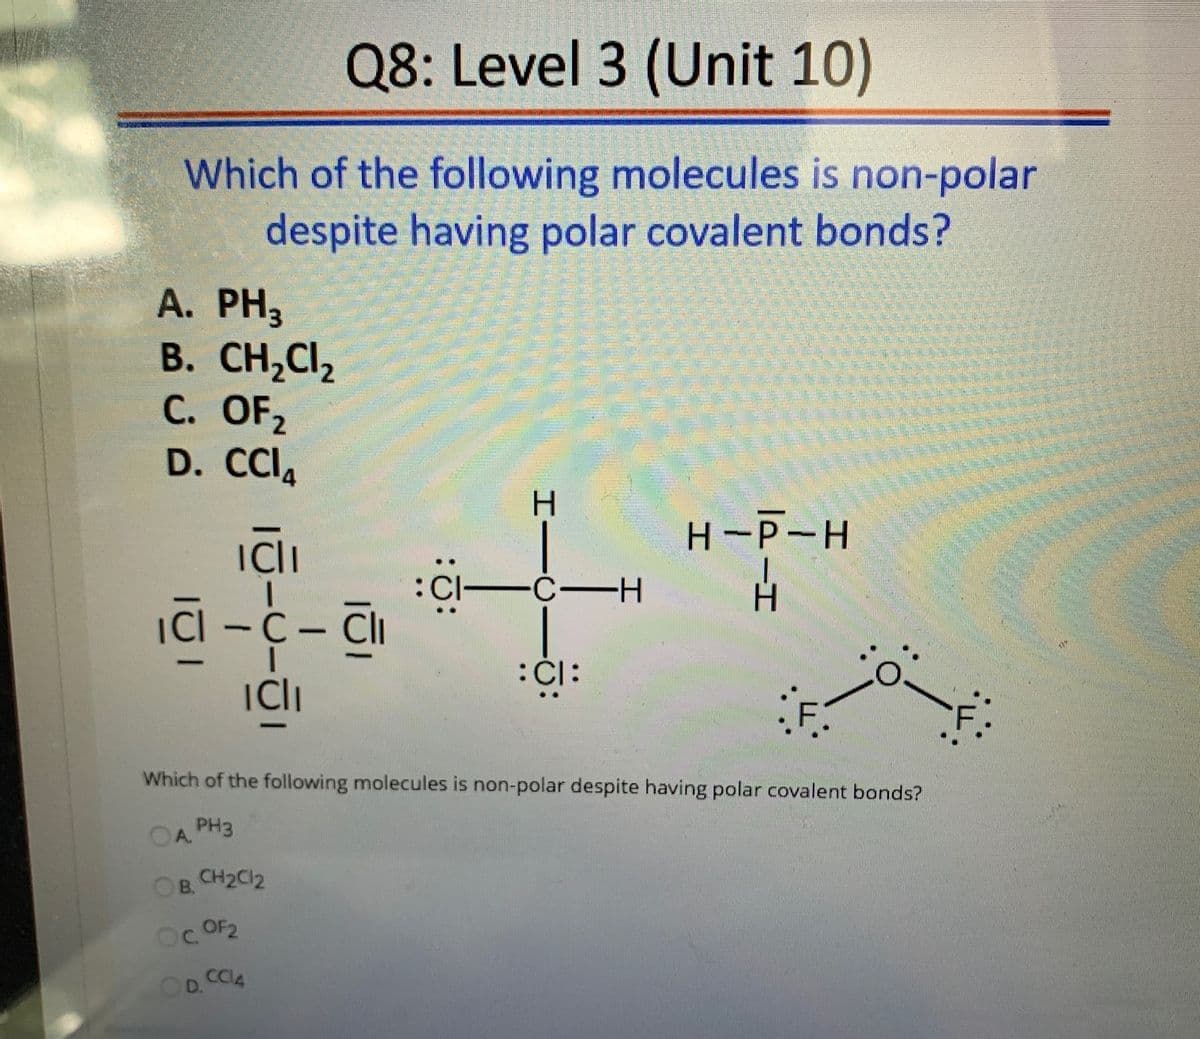 Q8: Level 3 (Unit 10)
Which of the following molecules is non-polar
despite having polar covalent bonds?
А. PНз
B. CH,Cl2
С. OFz
D. CCIA
H-P-H
ICli
ICI
-C-H
Cl -C- Cli
ICli
F.
-
Which of the following molecules is non-polar despite having polar covalent bonds?
OA PH3
B.
CH2C12
C.
OF2
D.CC4
:0:
